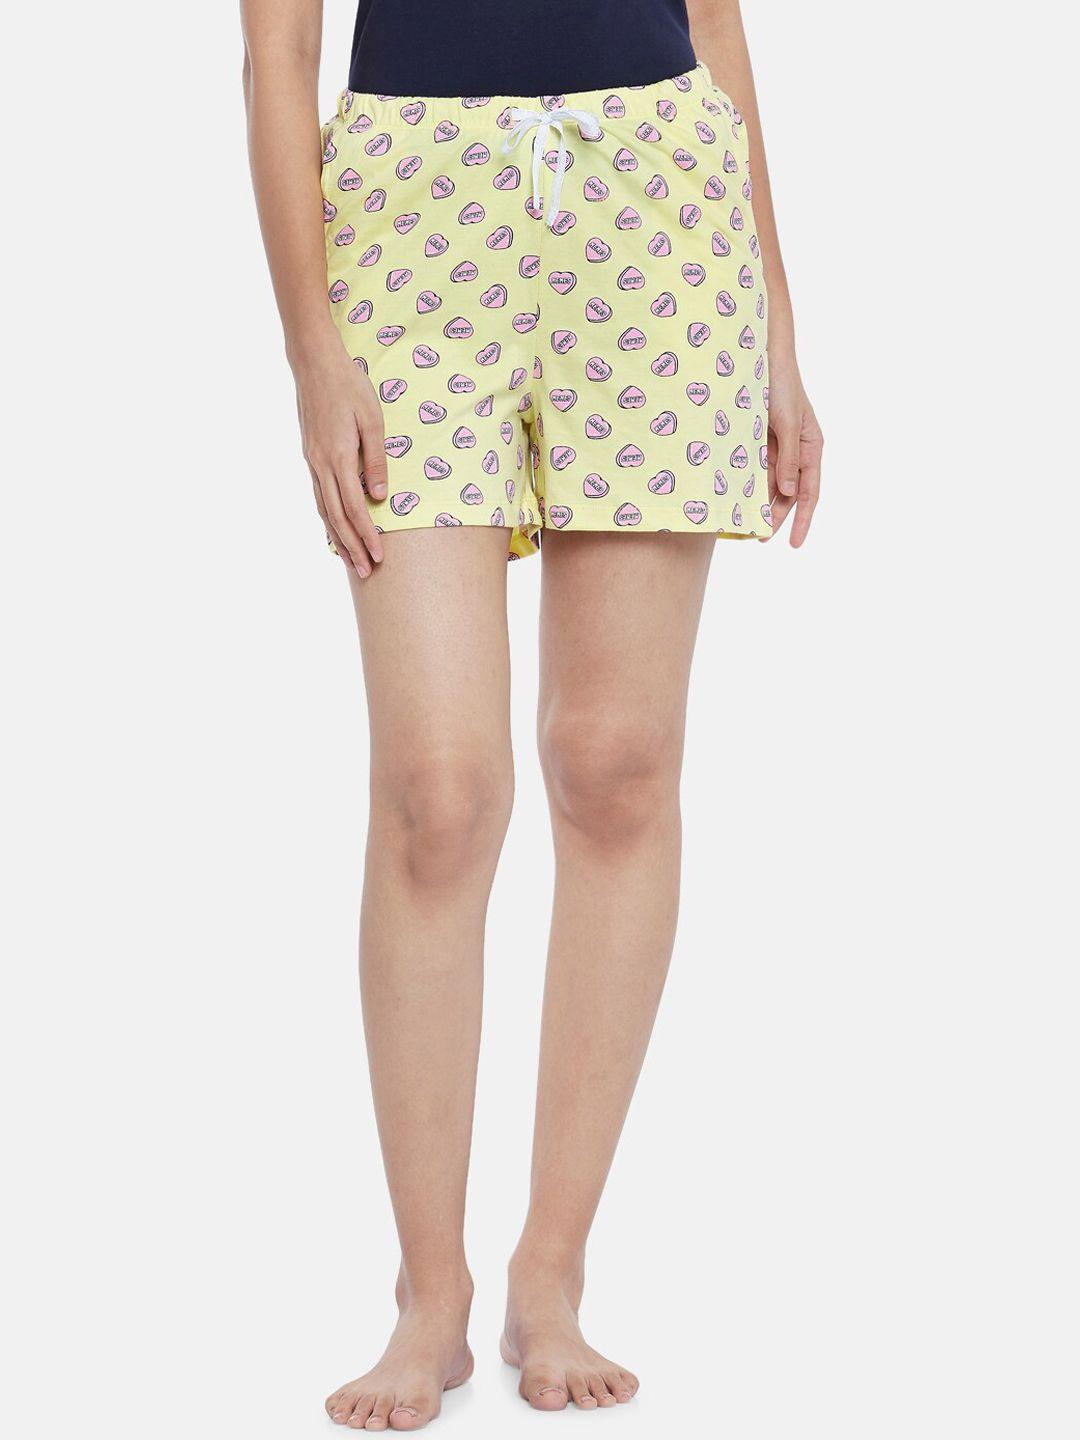 dreamz-by-pantaloons-women-yellow-printed-lounge-shorts